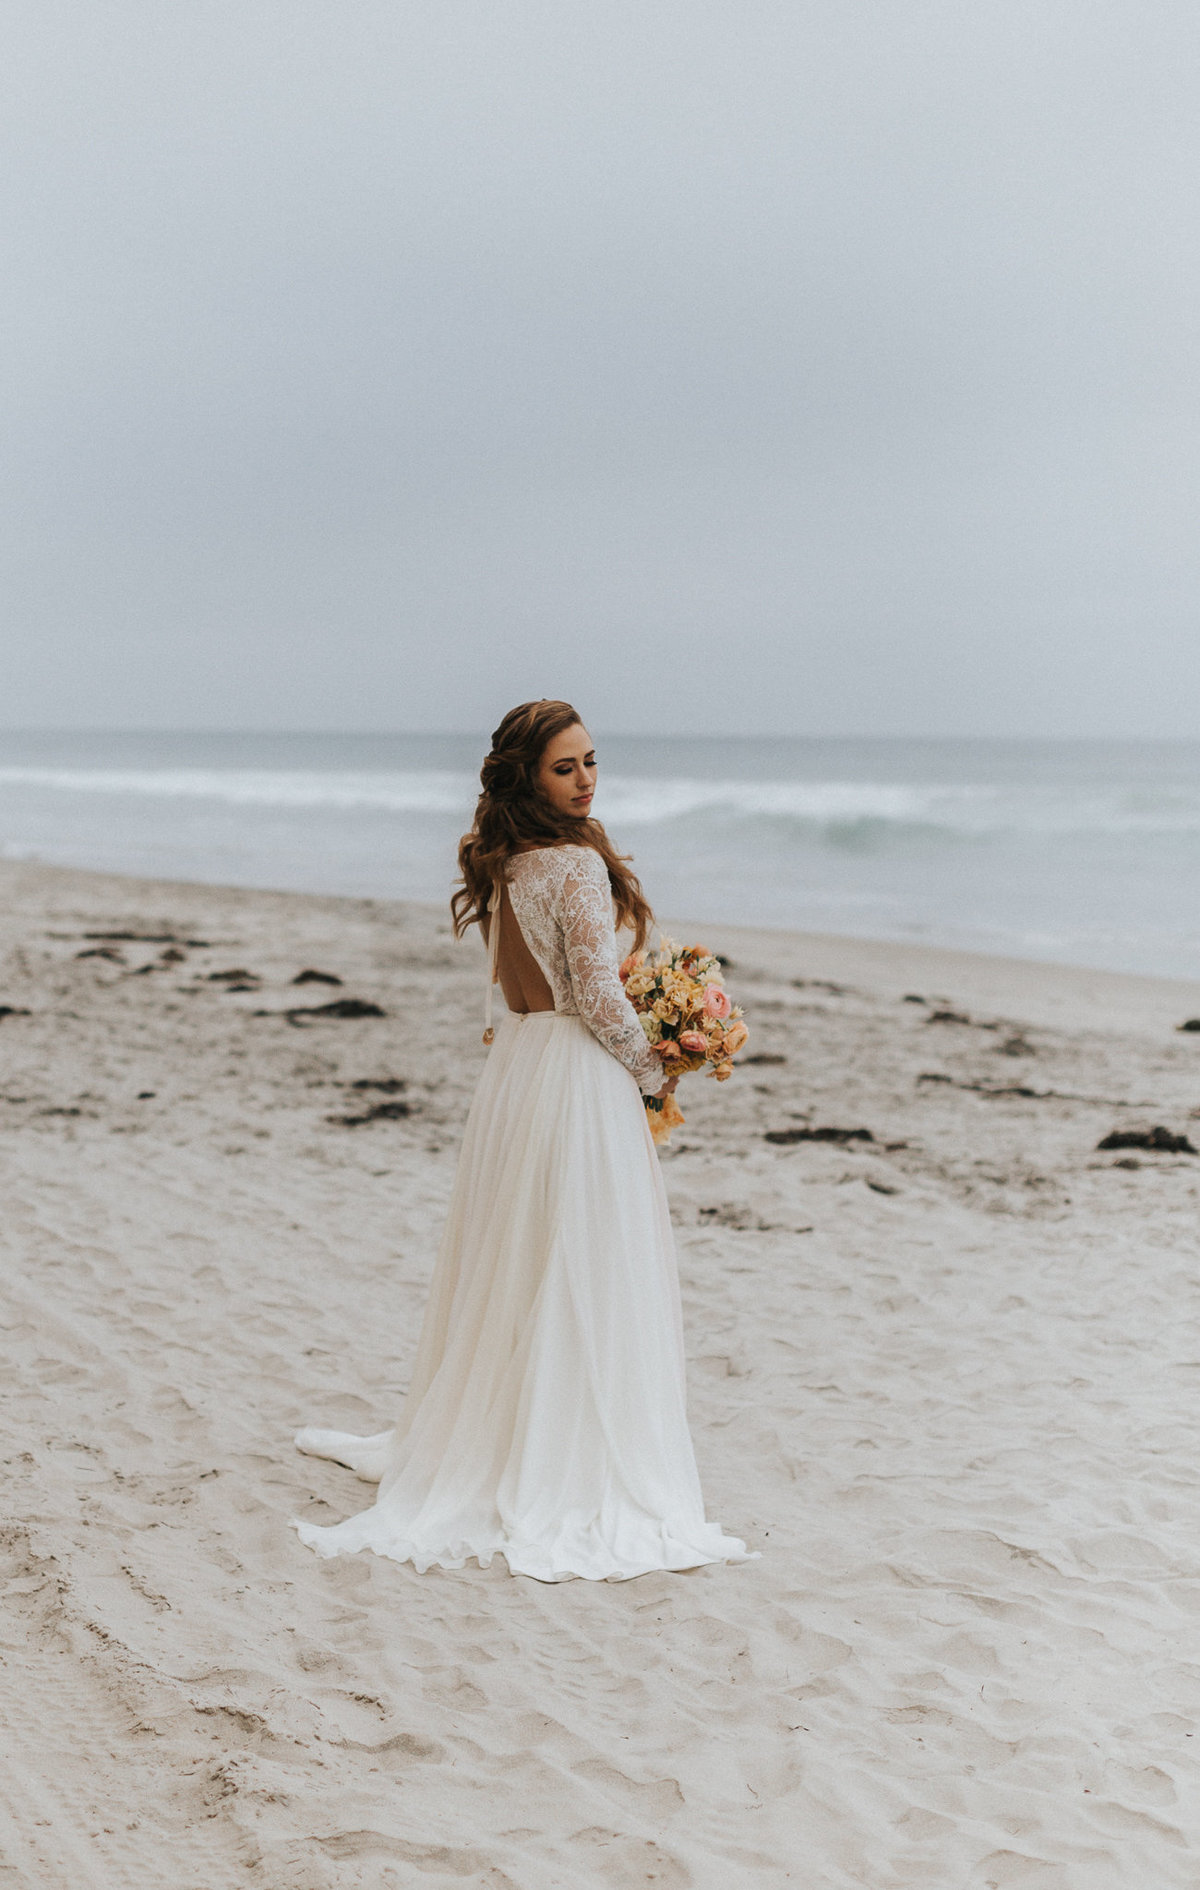 Bridal portrait during her beach elopement in San Diego, California.